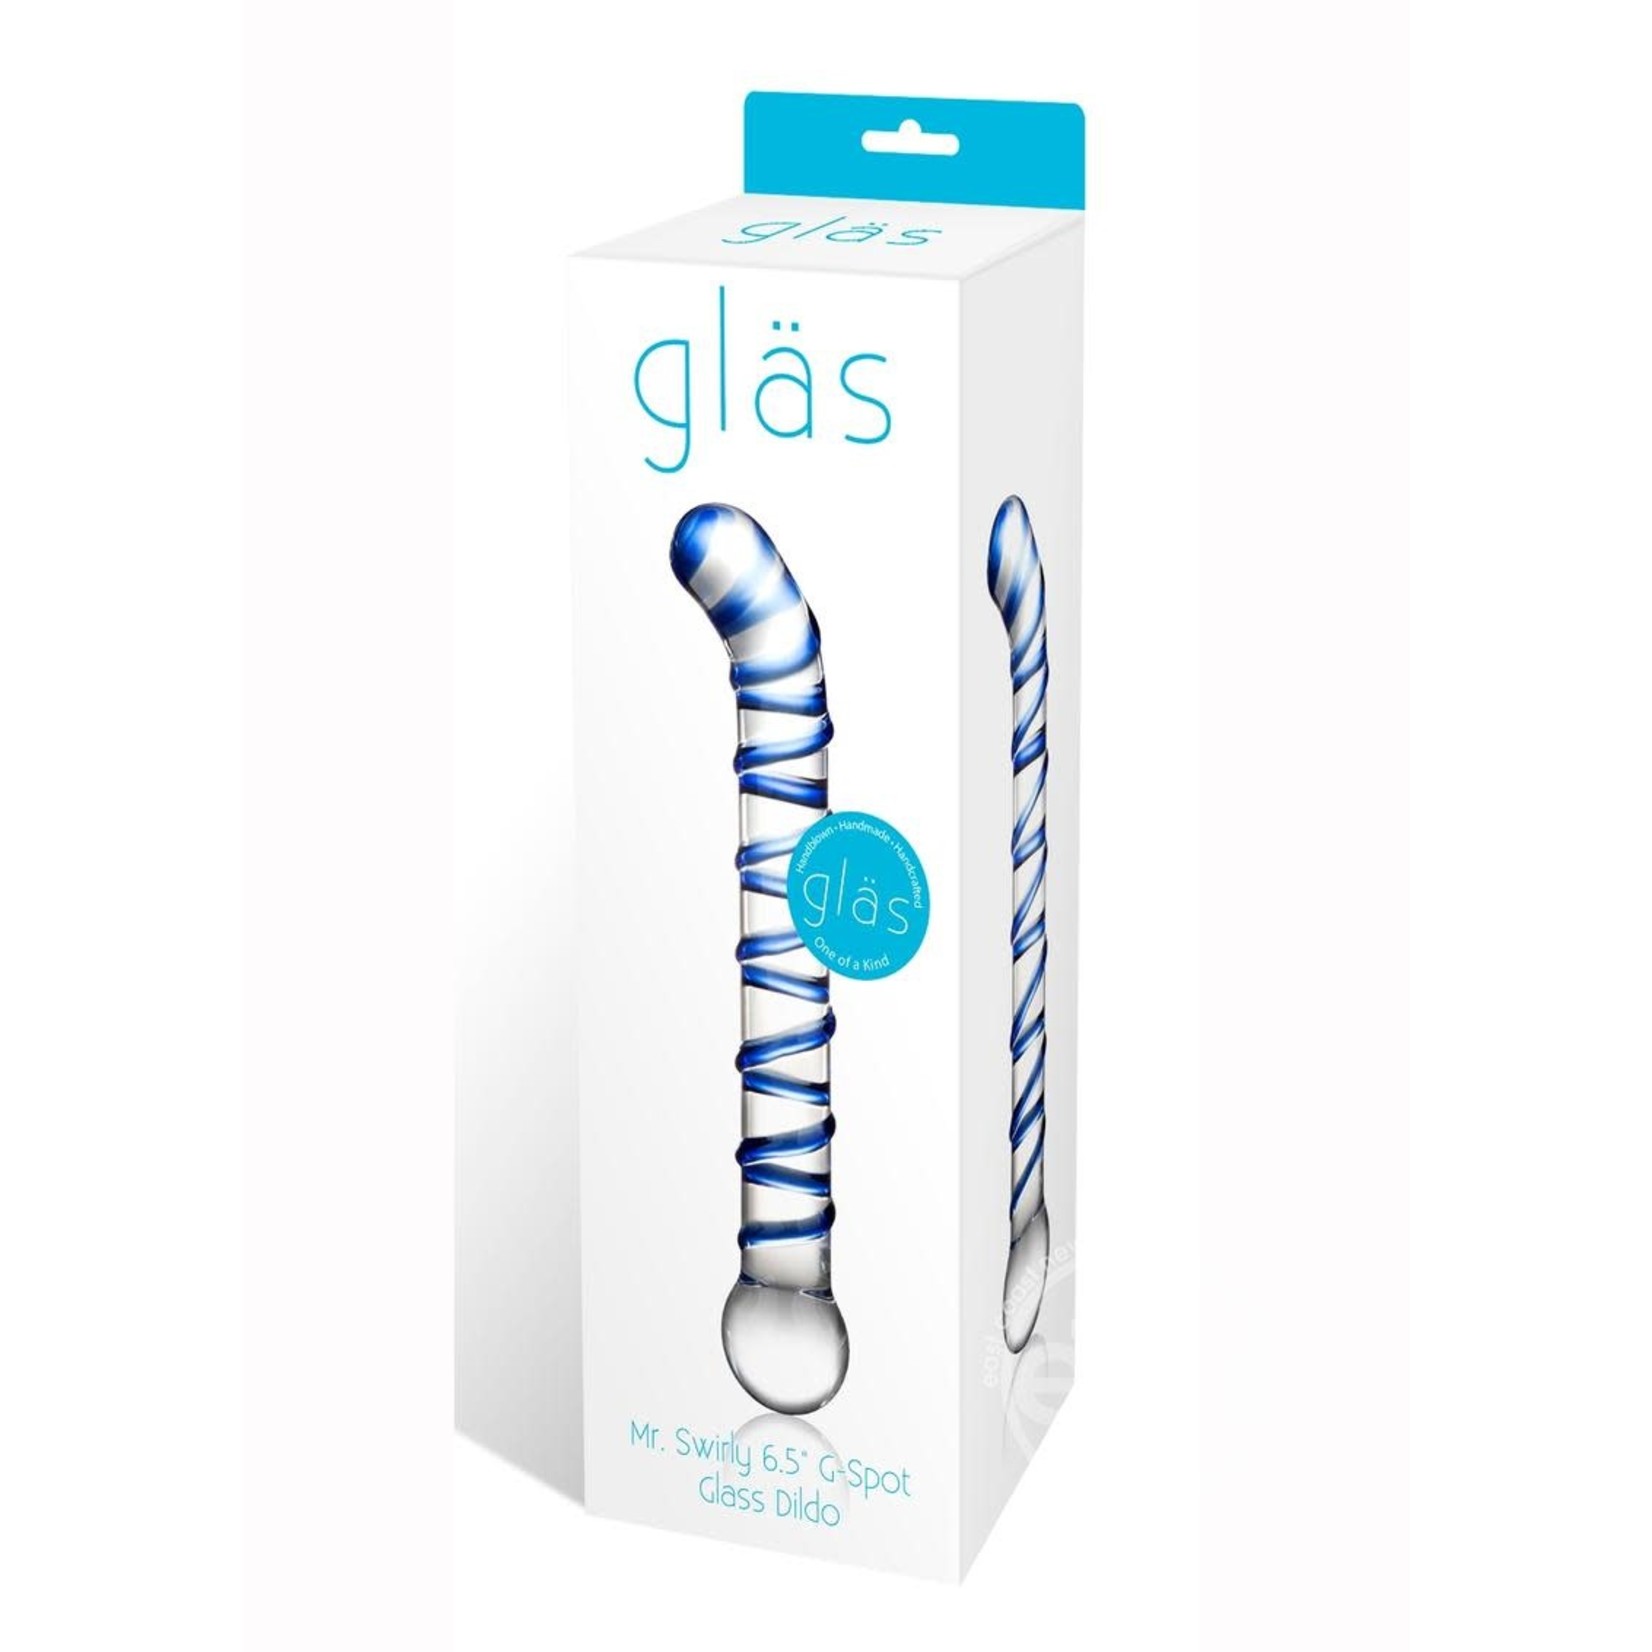 Glas Mr. Swirly G-Spot Glass Dildo 6.5in - Clear/Blue